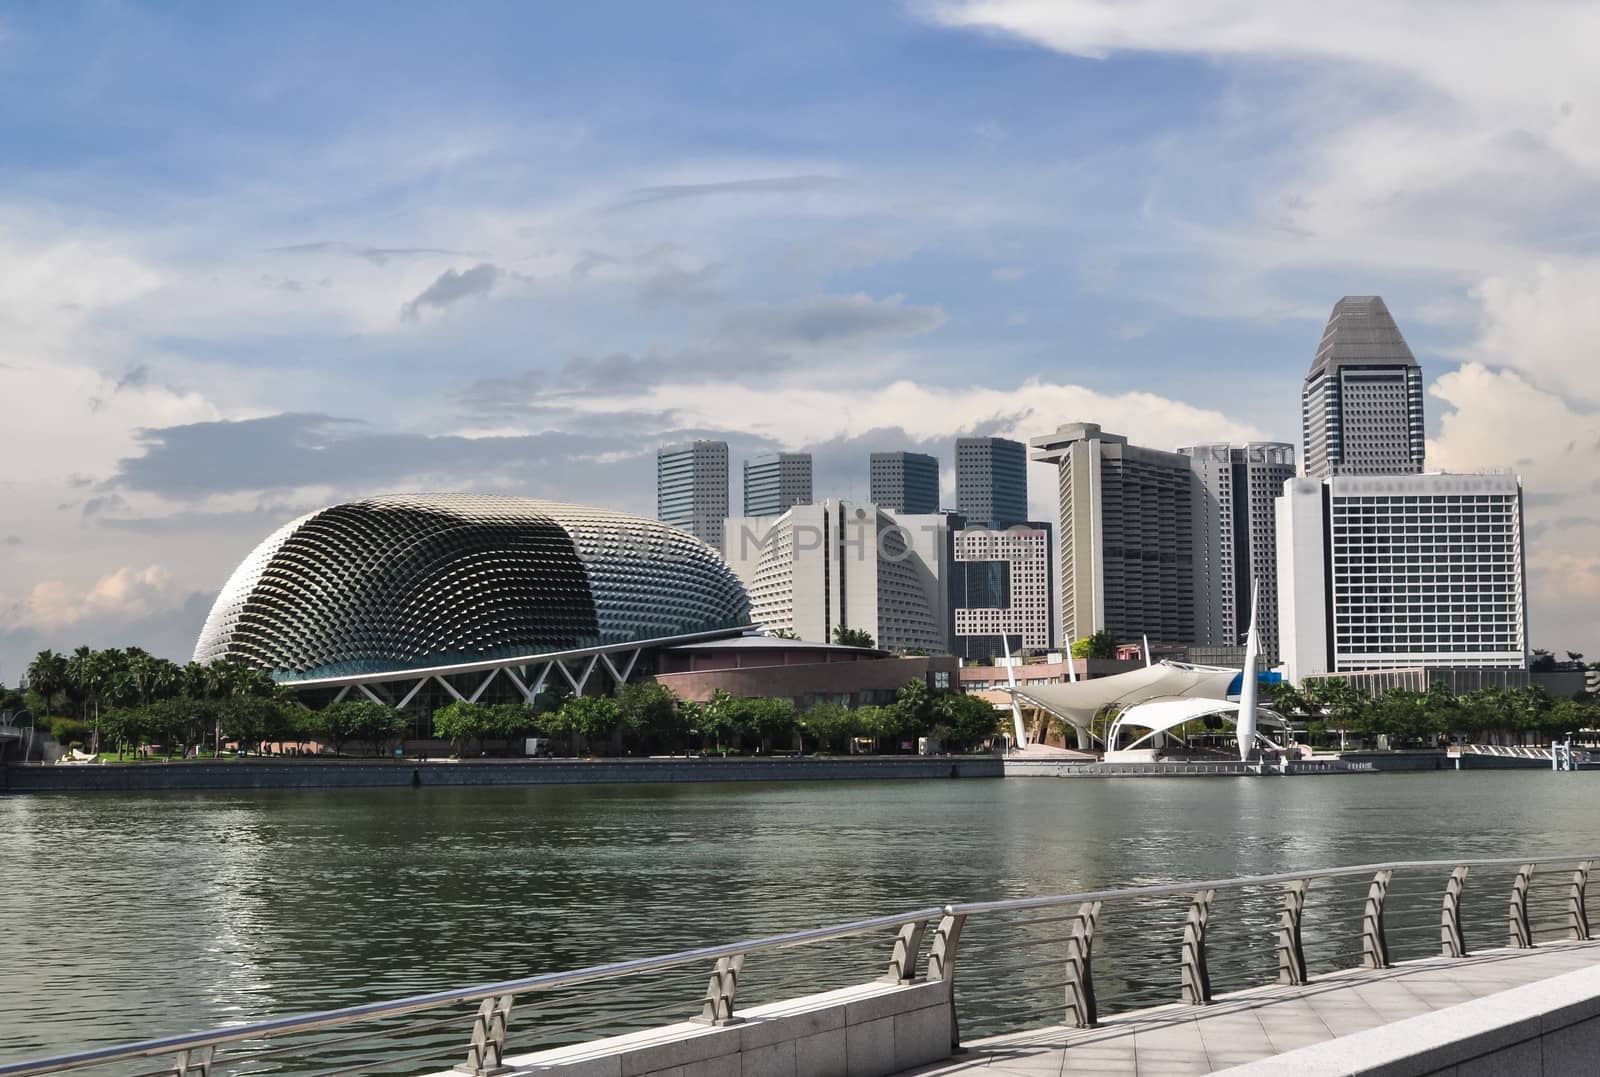 Singapore city skyline finacial district by weltreisendertj